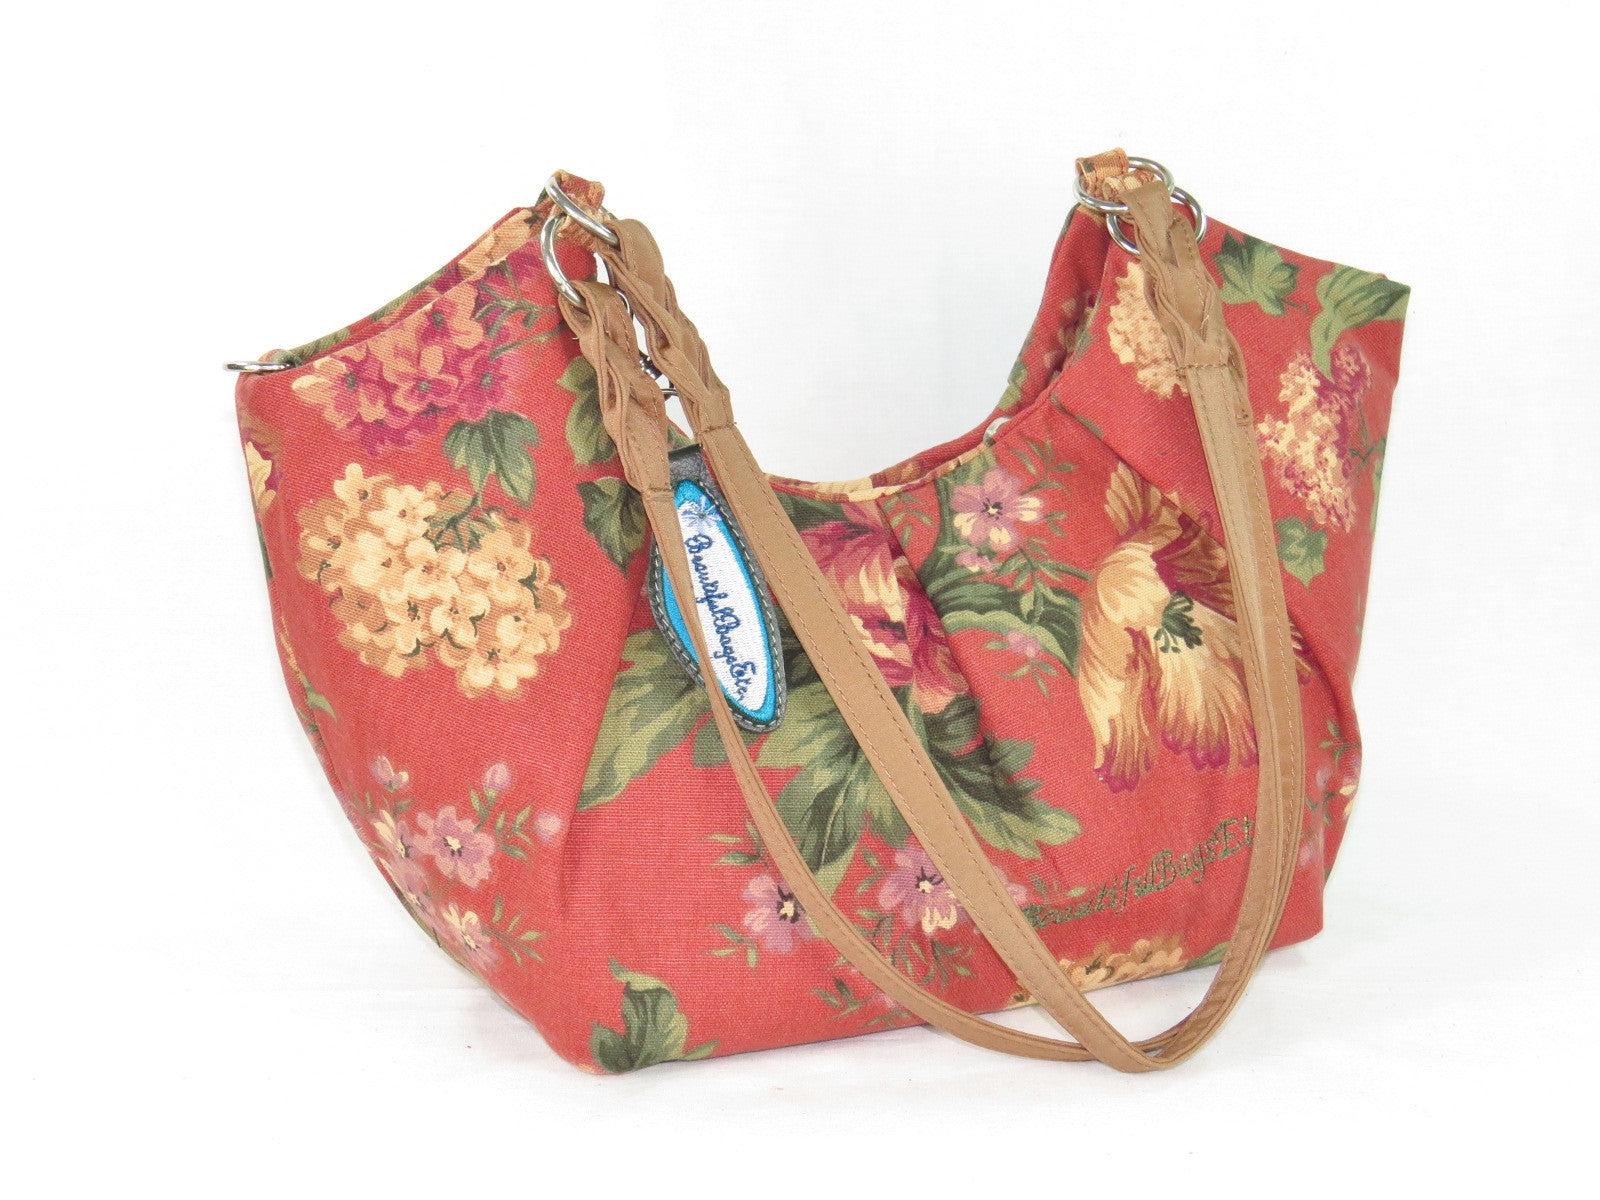 Autumn Floral Print on Canvas Tote Style Handbag